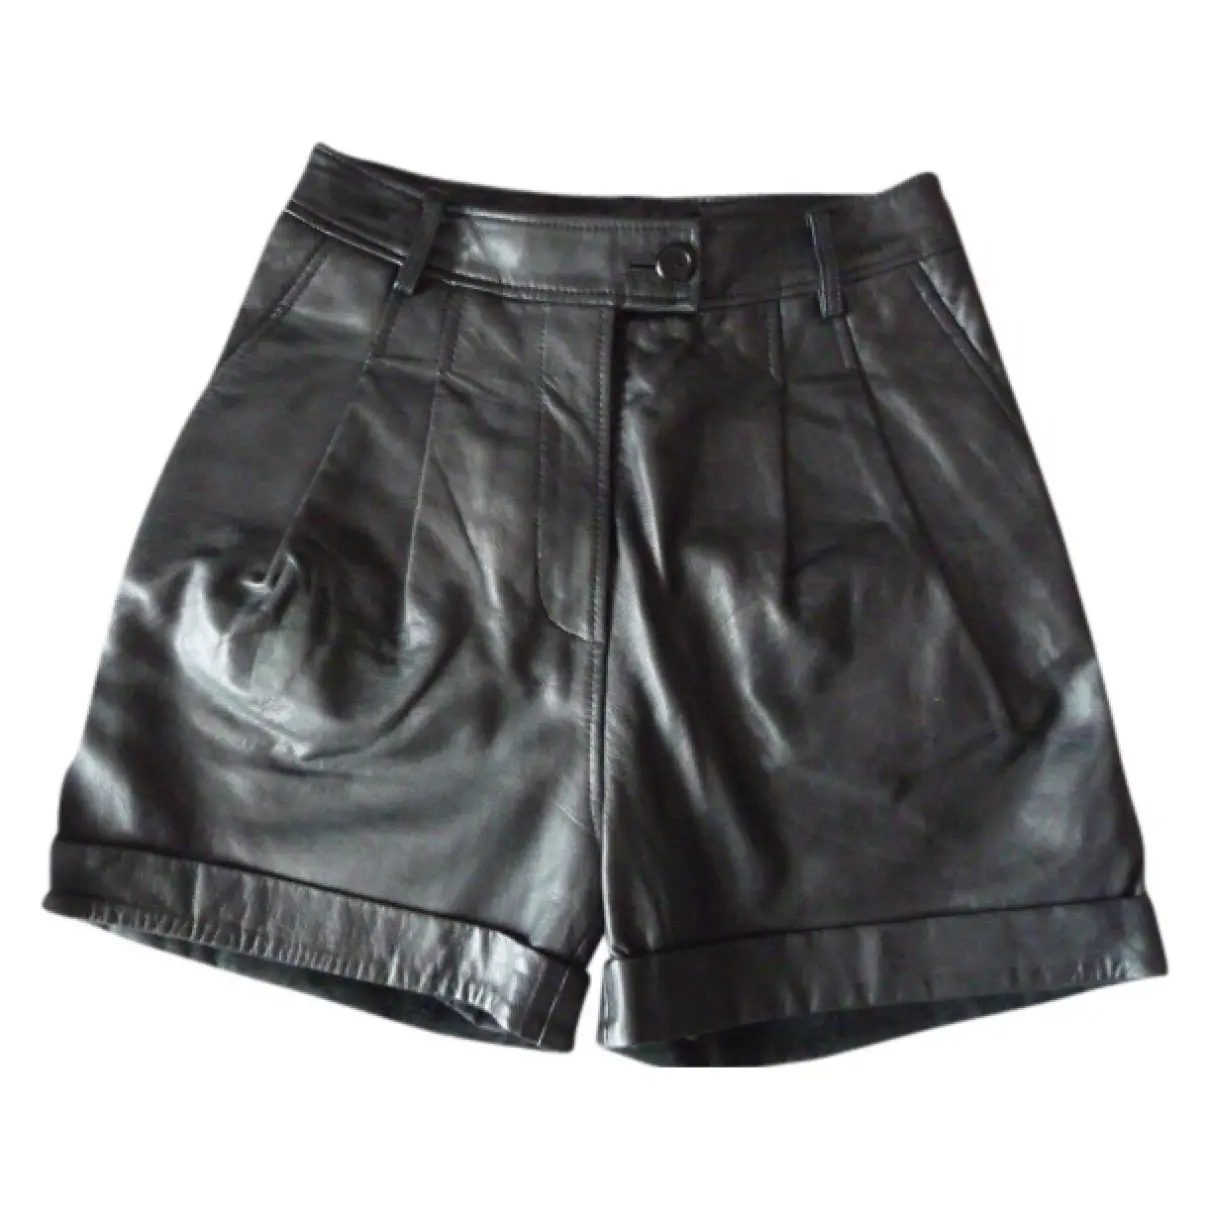 Black Leather Shorts Paul & Joe Sister